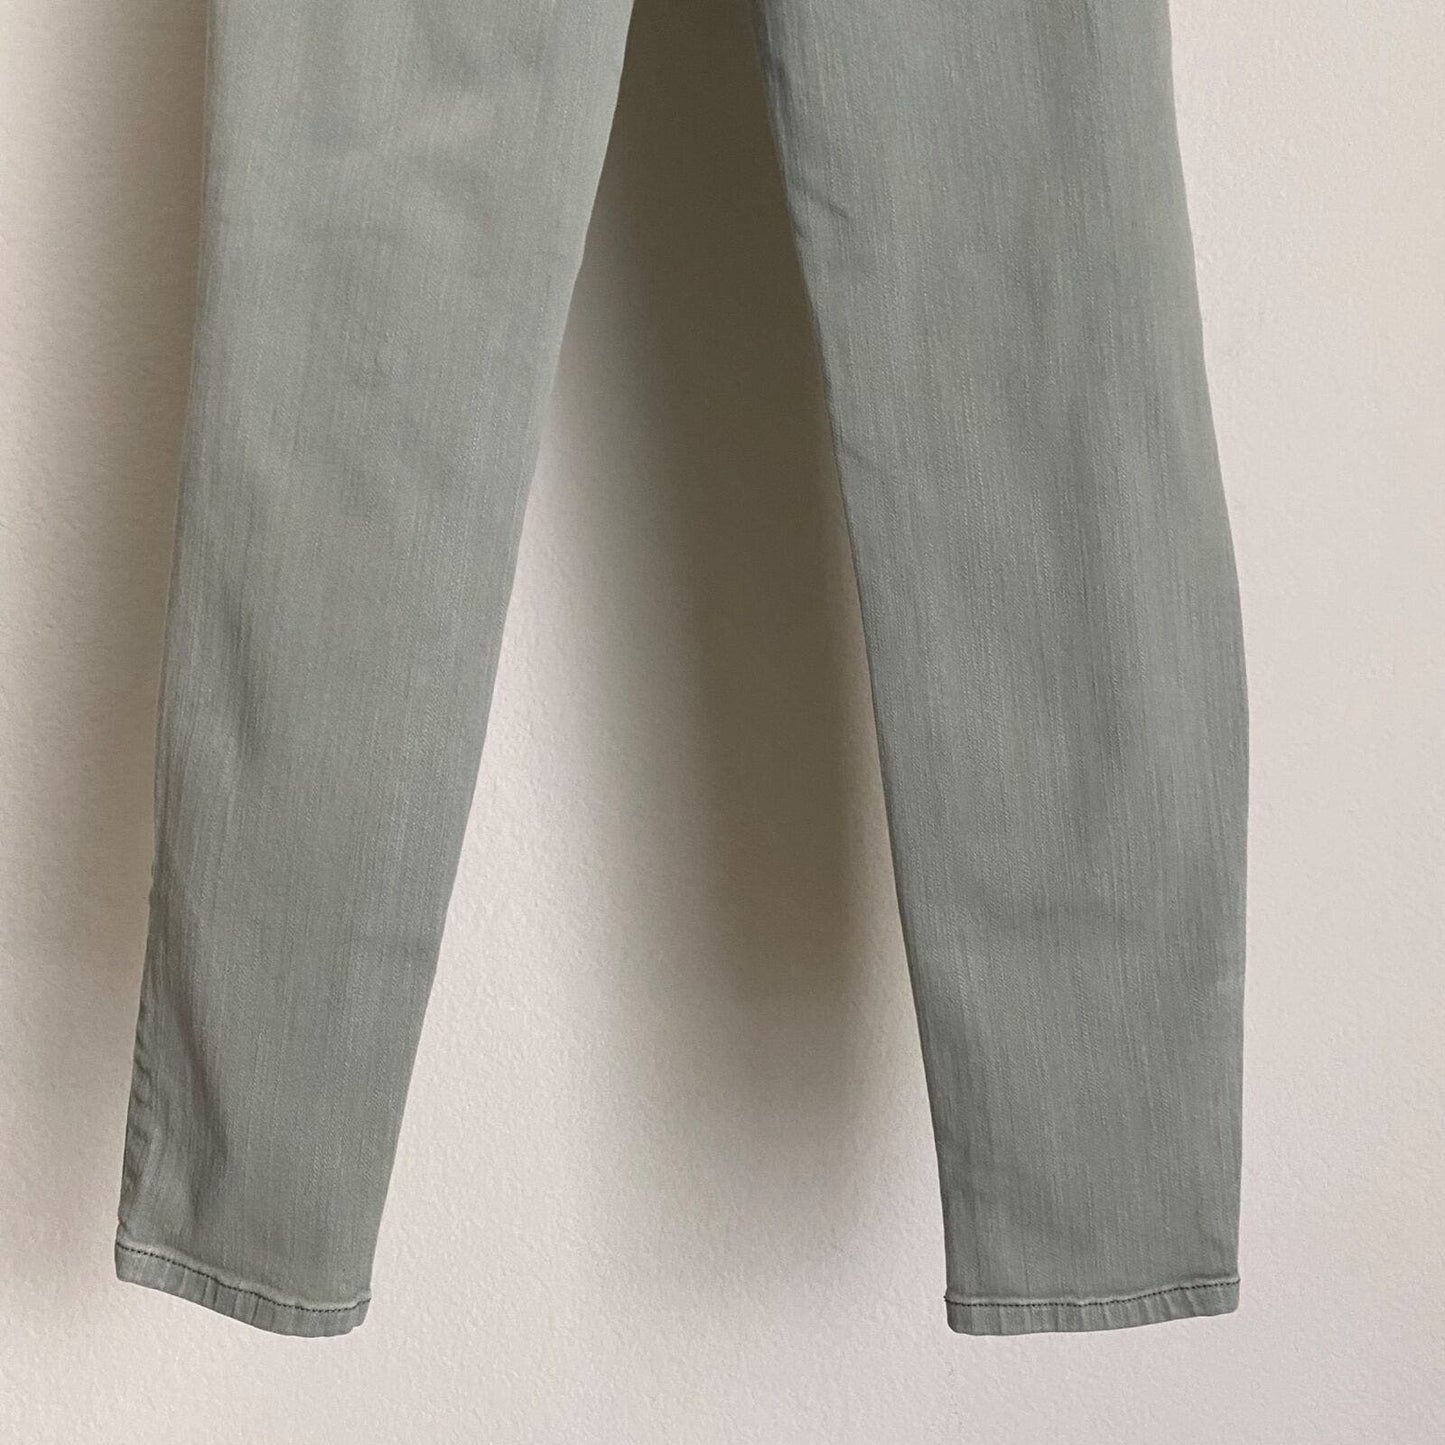 Mossimo sz 4 or 27 waist High Rise skinny jeans